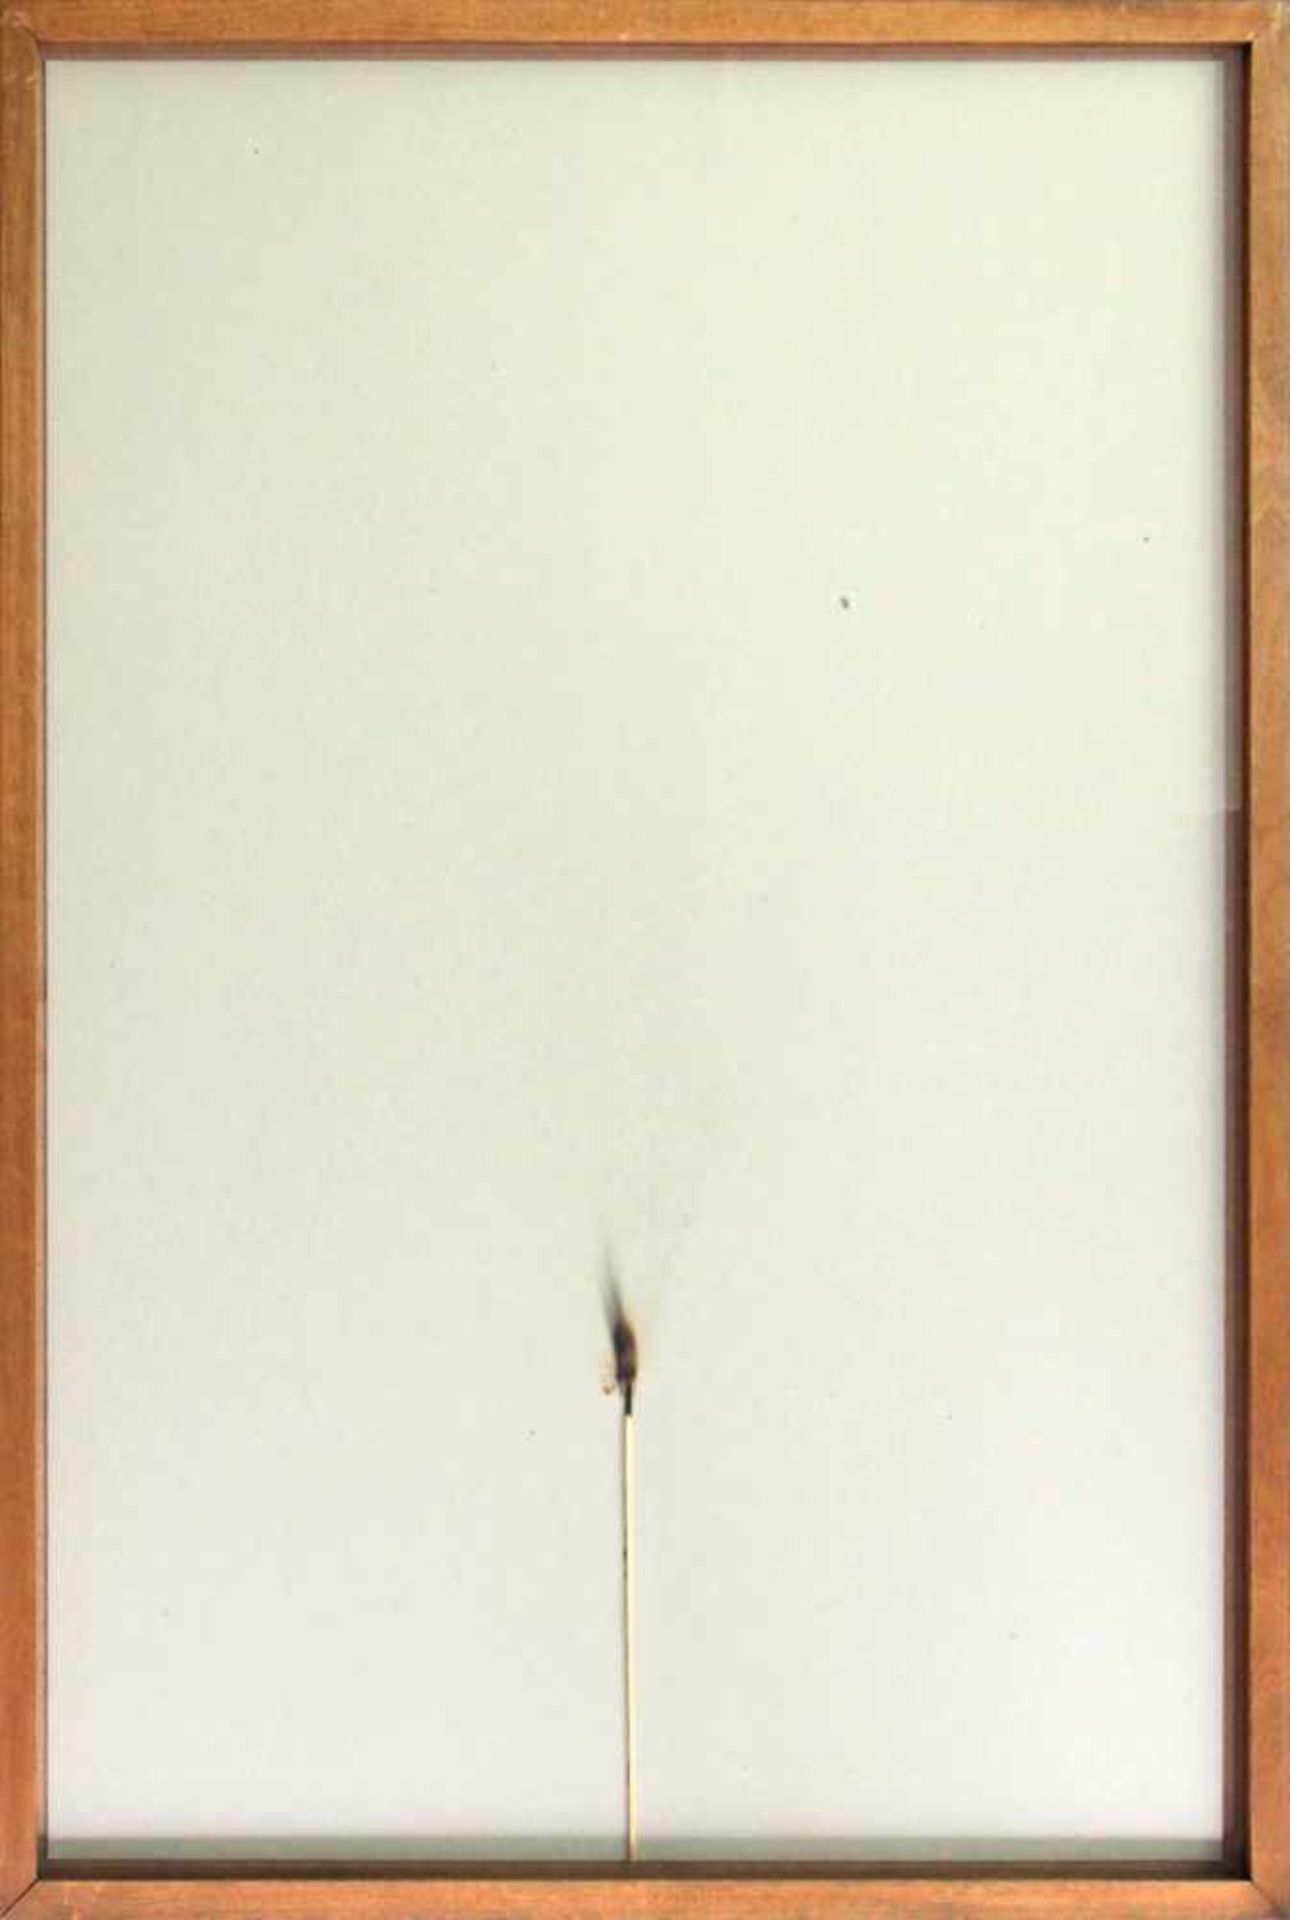 Aubertin Bernard1934-2015Dessin de feu1974Streichholz auf Karton101 x 71 cm